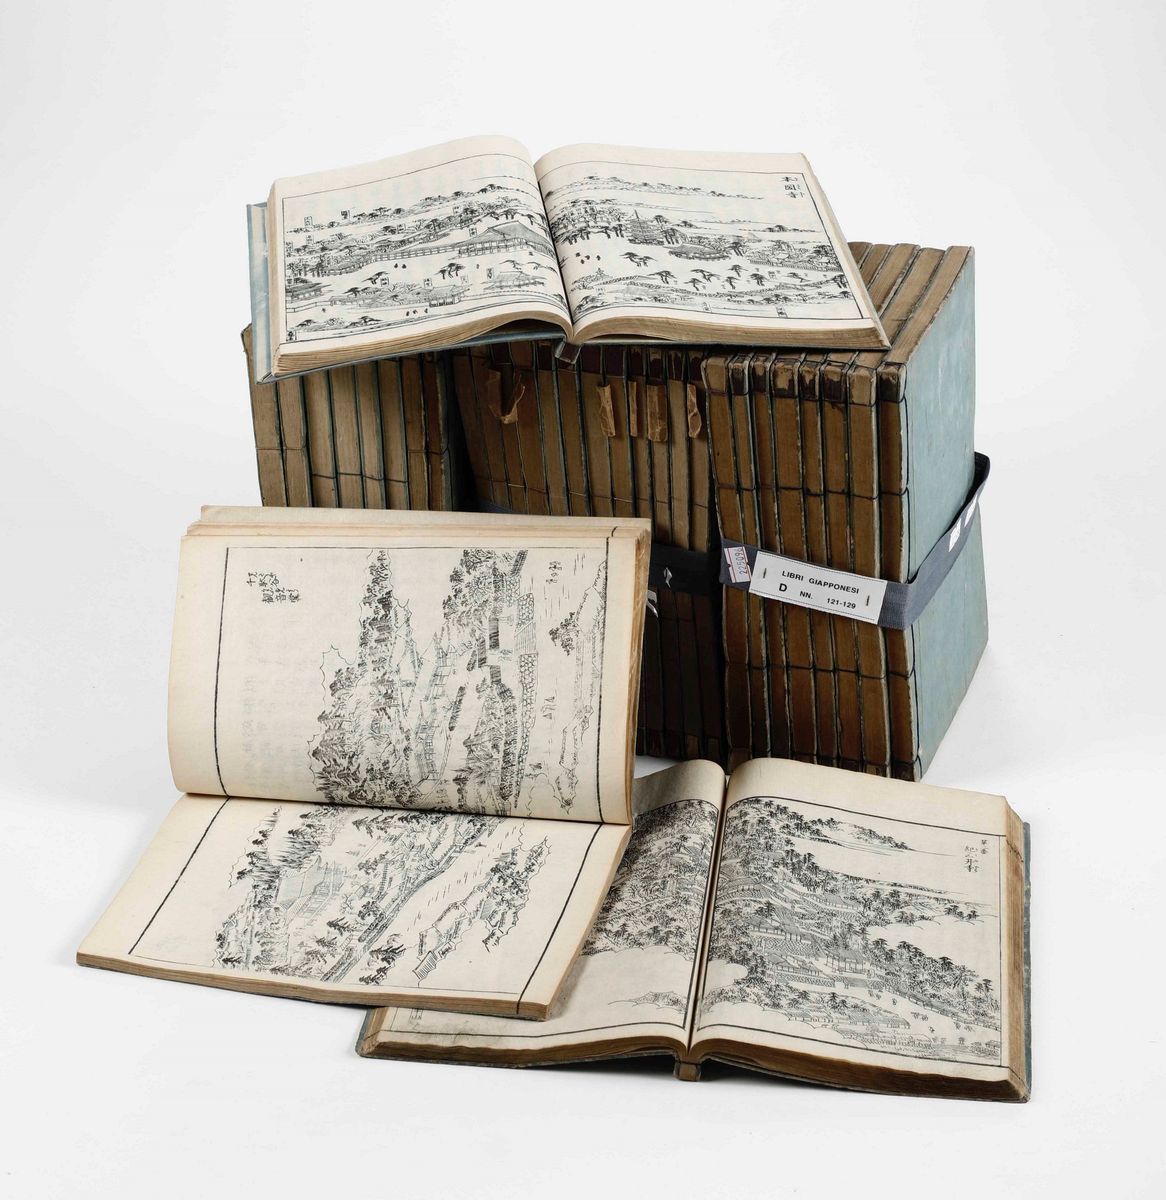 Giappone - Cultura nipponica Lotto di libri giapponesi, Seconda metà sec.  XIX - Asta Stampe, Incisioni Antiche, Carte geografiche e Libri